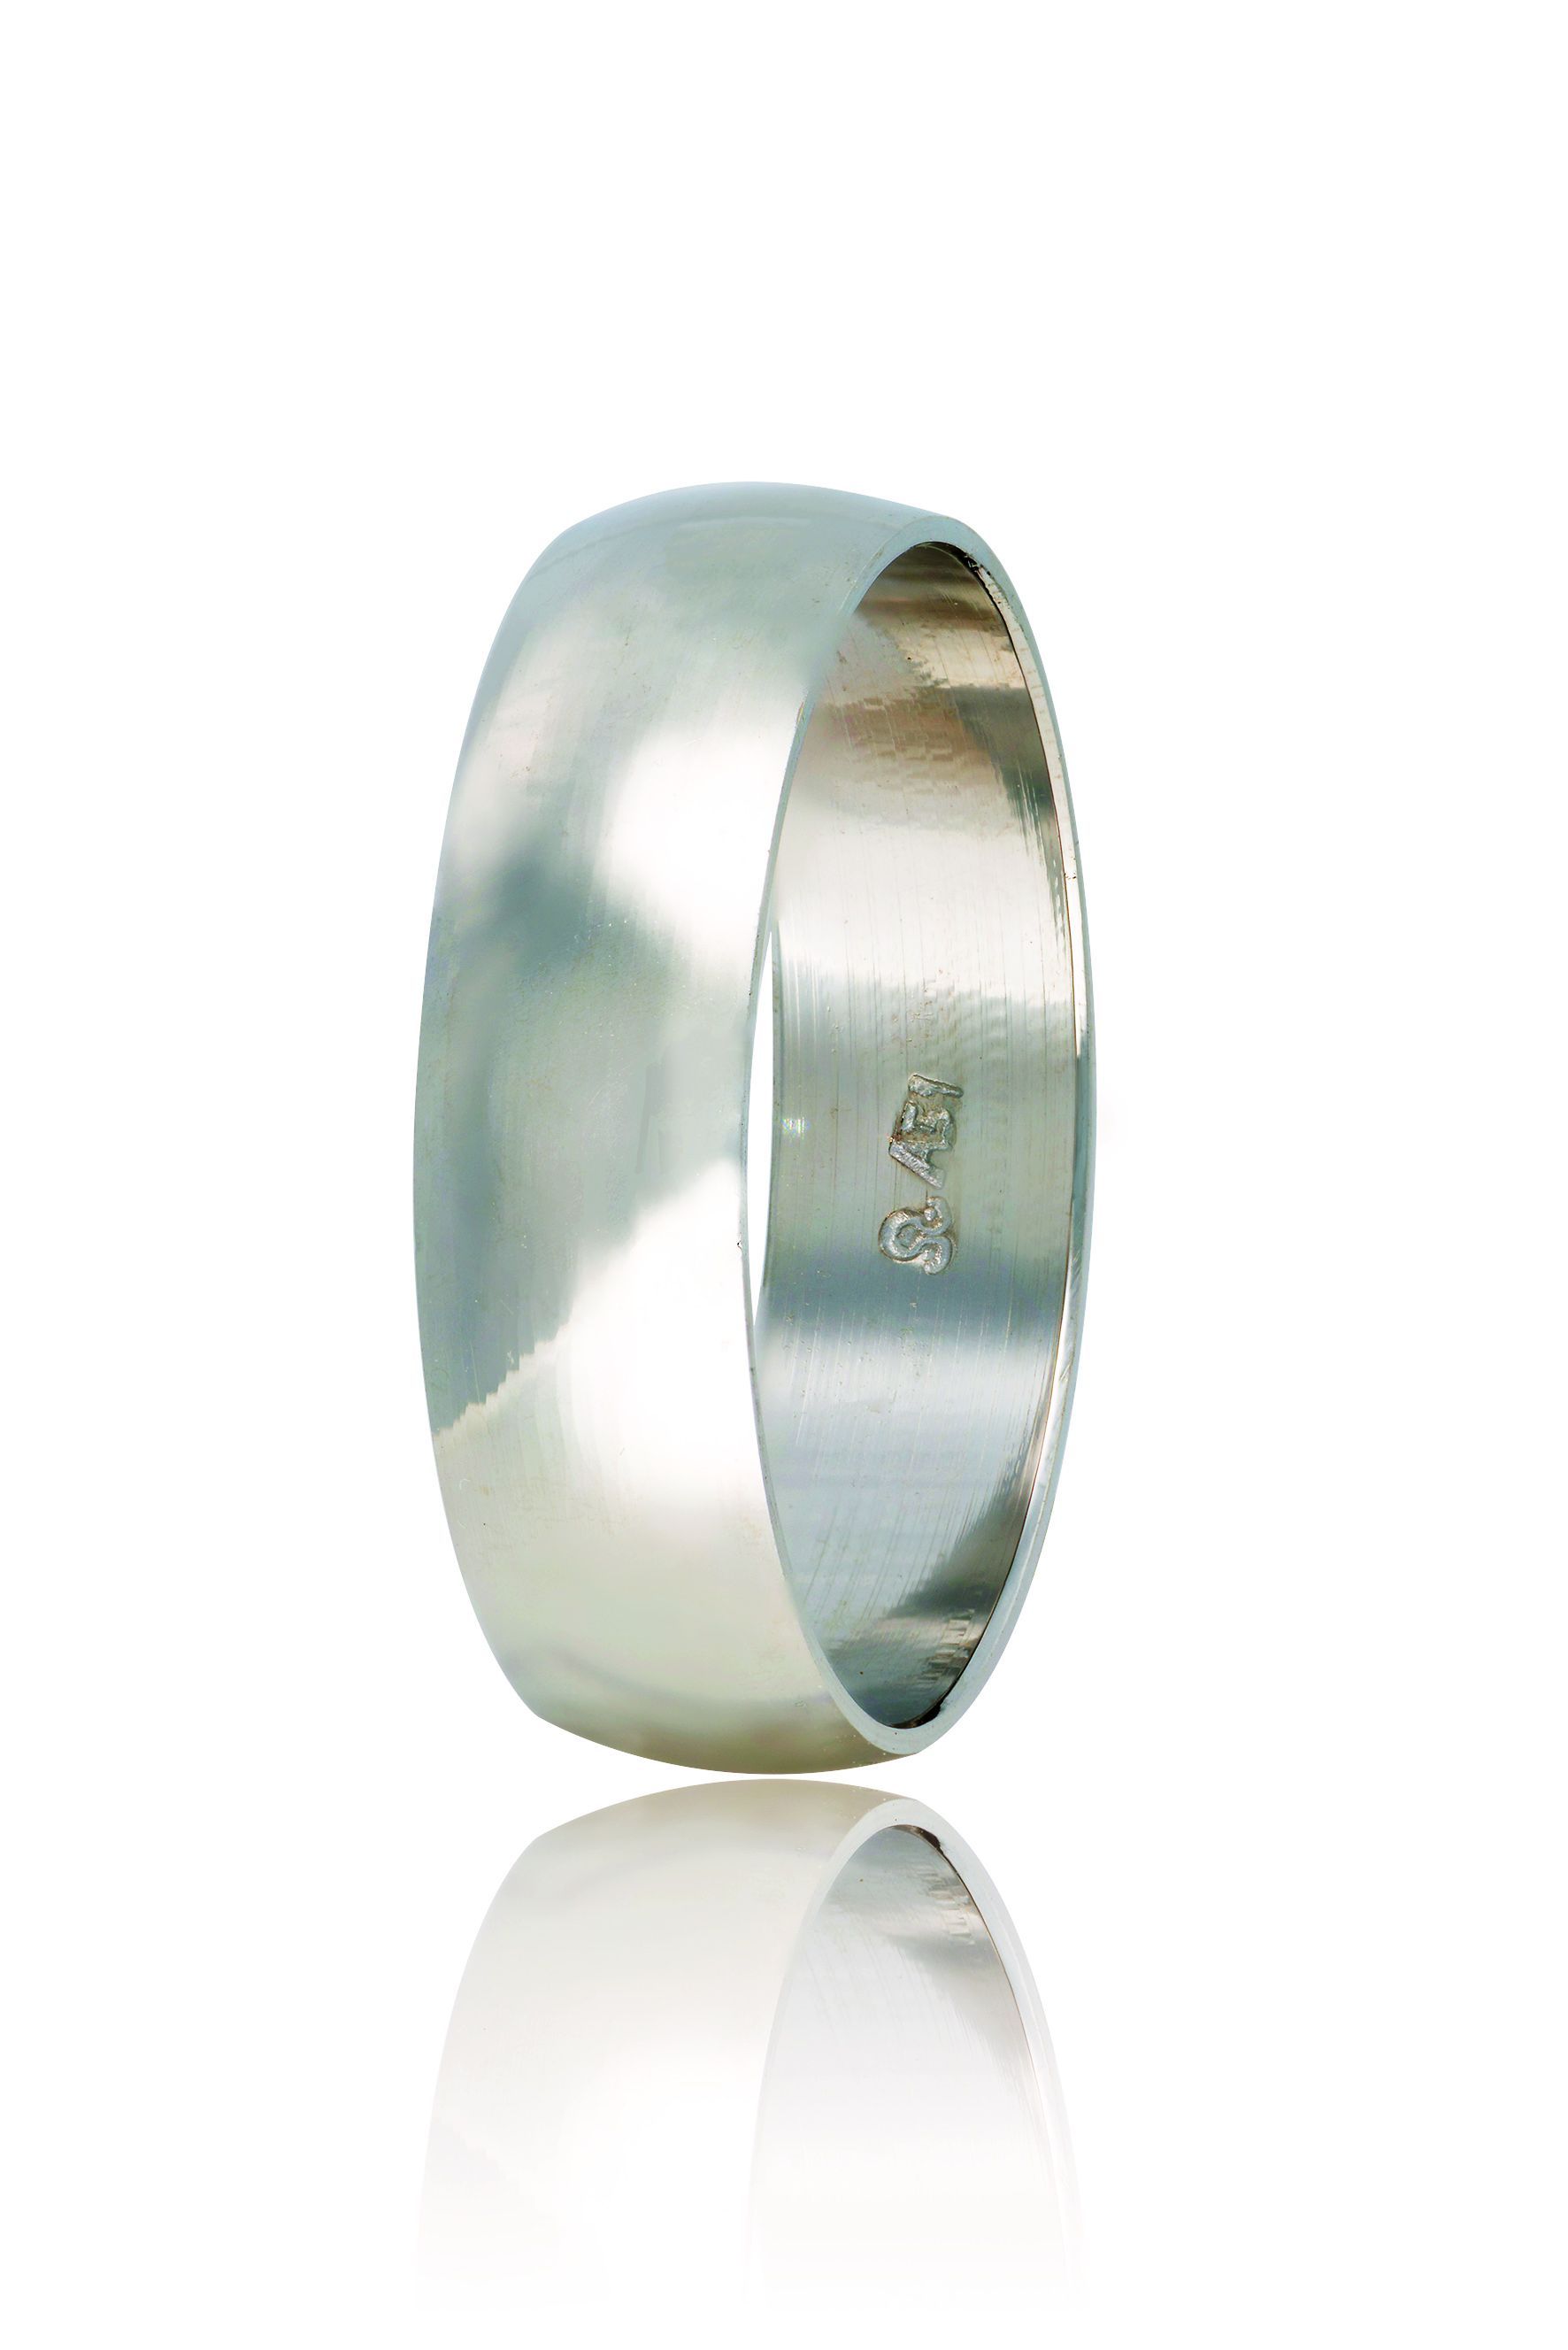 White gold wedding rings 6mm (code HR4Aw)